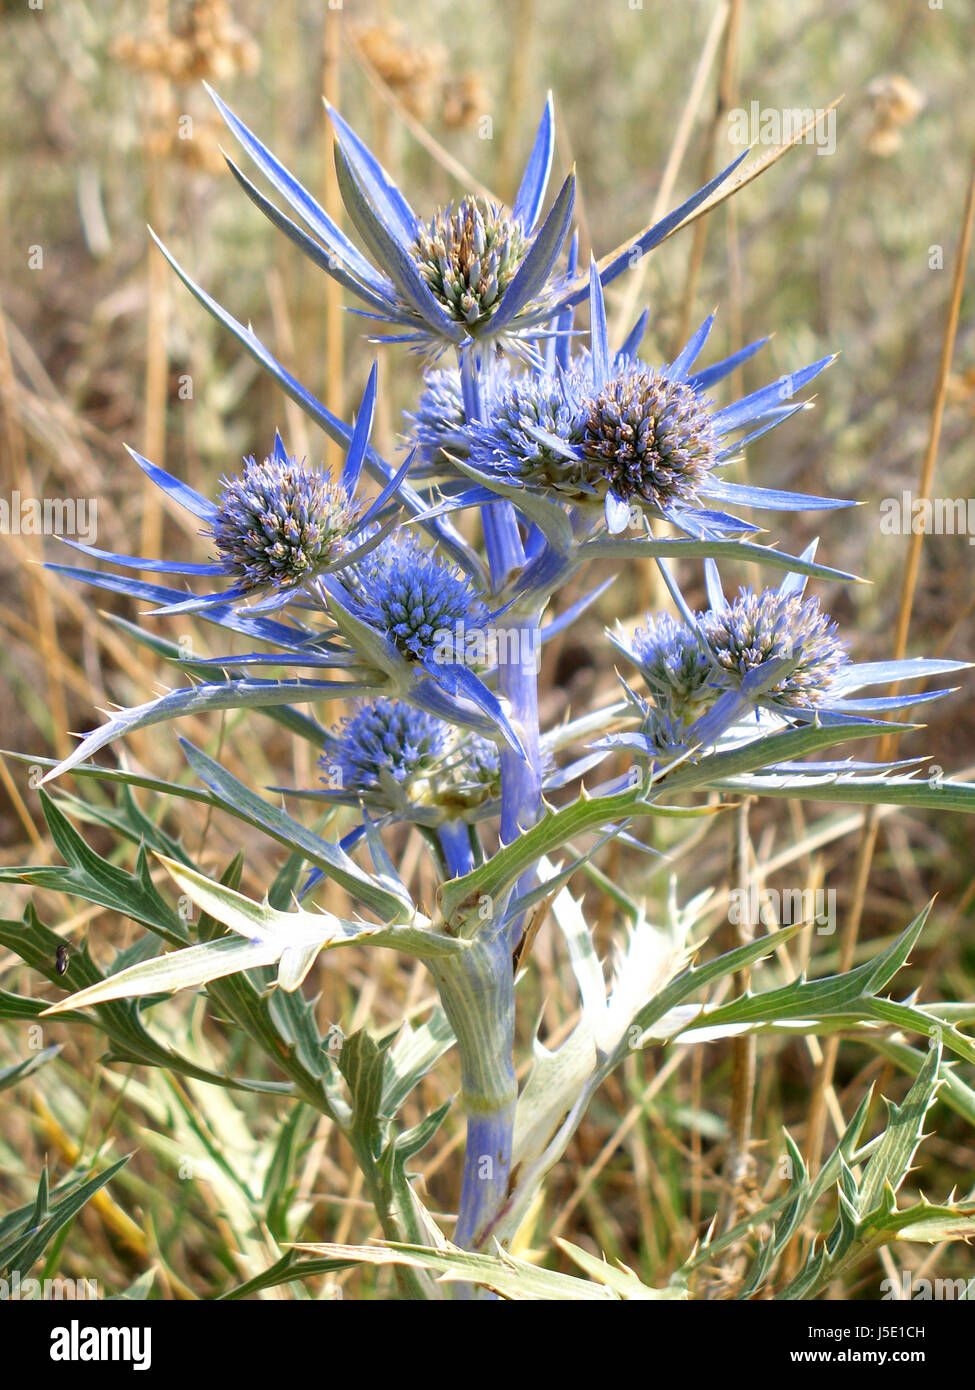 blue flower plant bloom blossom flourish flourishing thistle eryngium Stock Photo